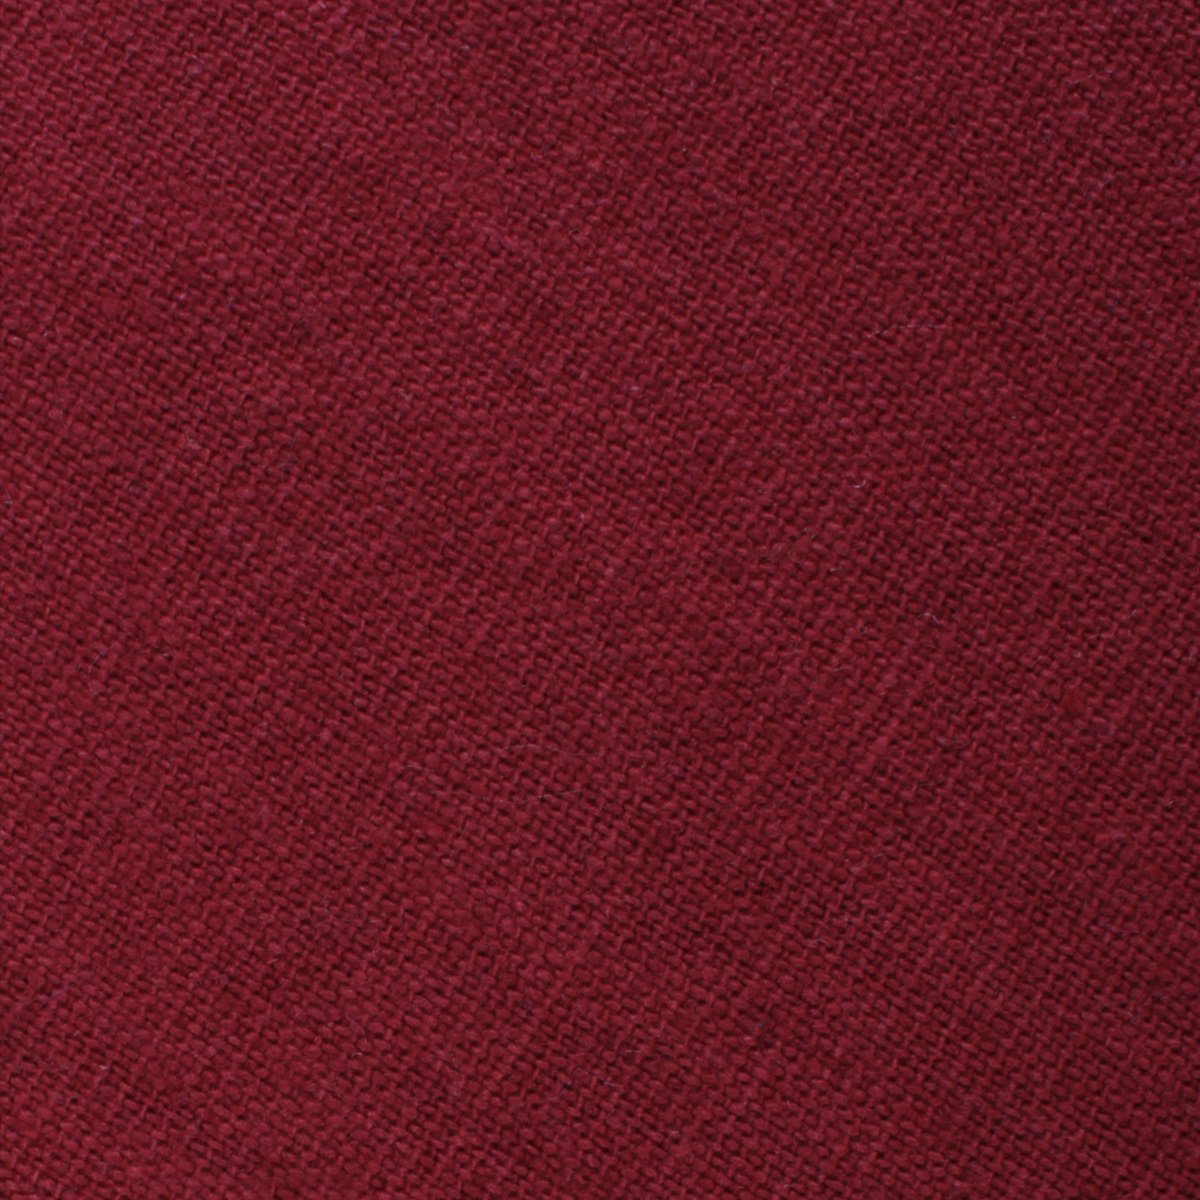 Carmine Burgundy Linen Skinny Tie Fabric